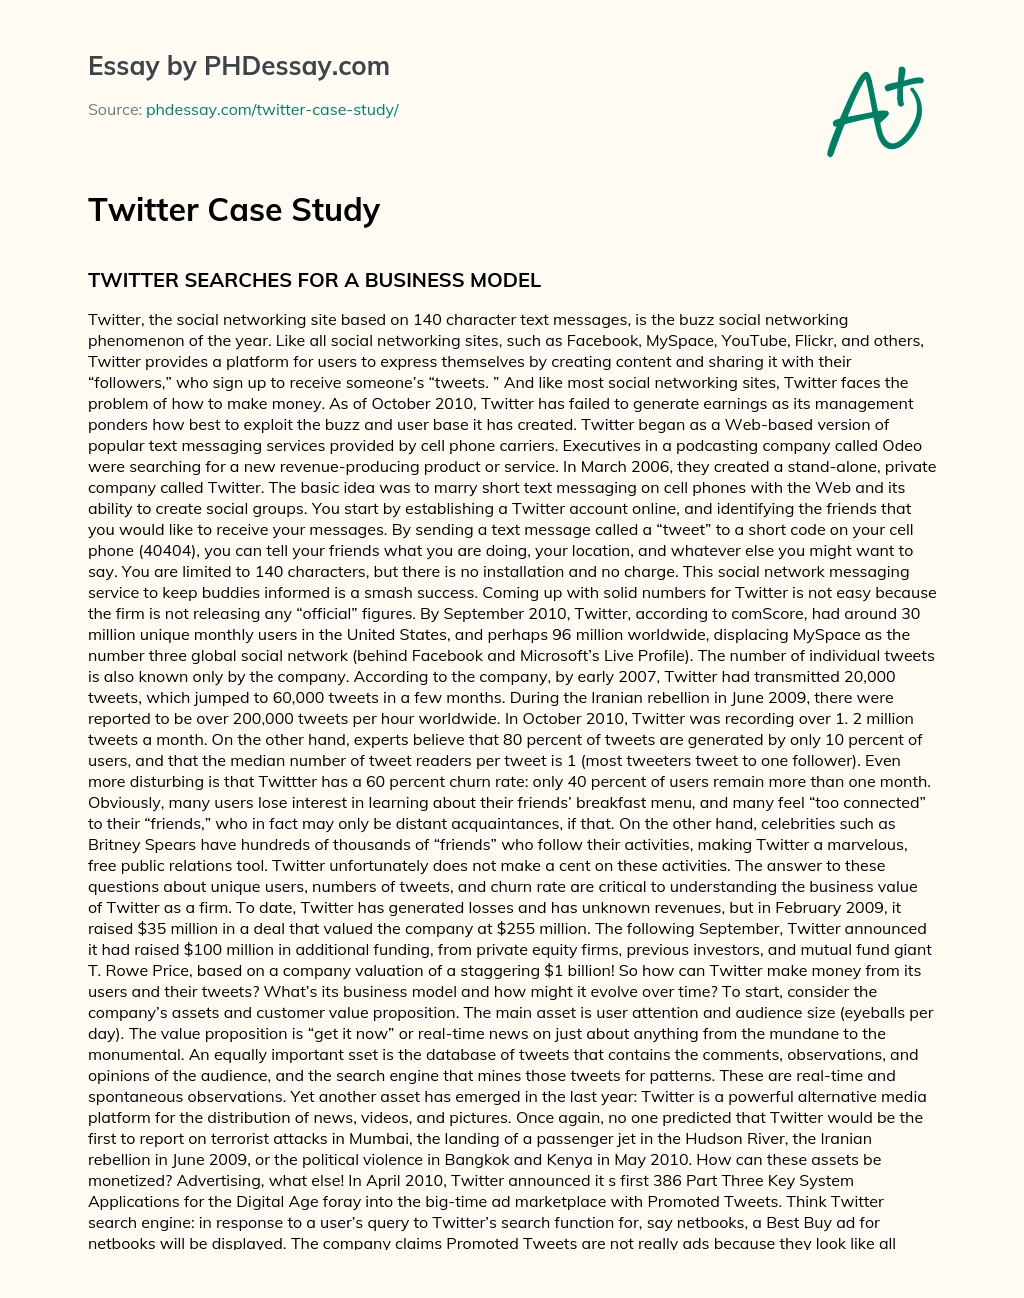 Twitter Case Study essay